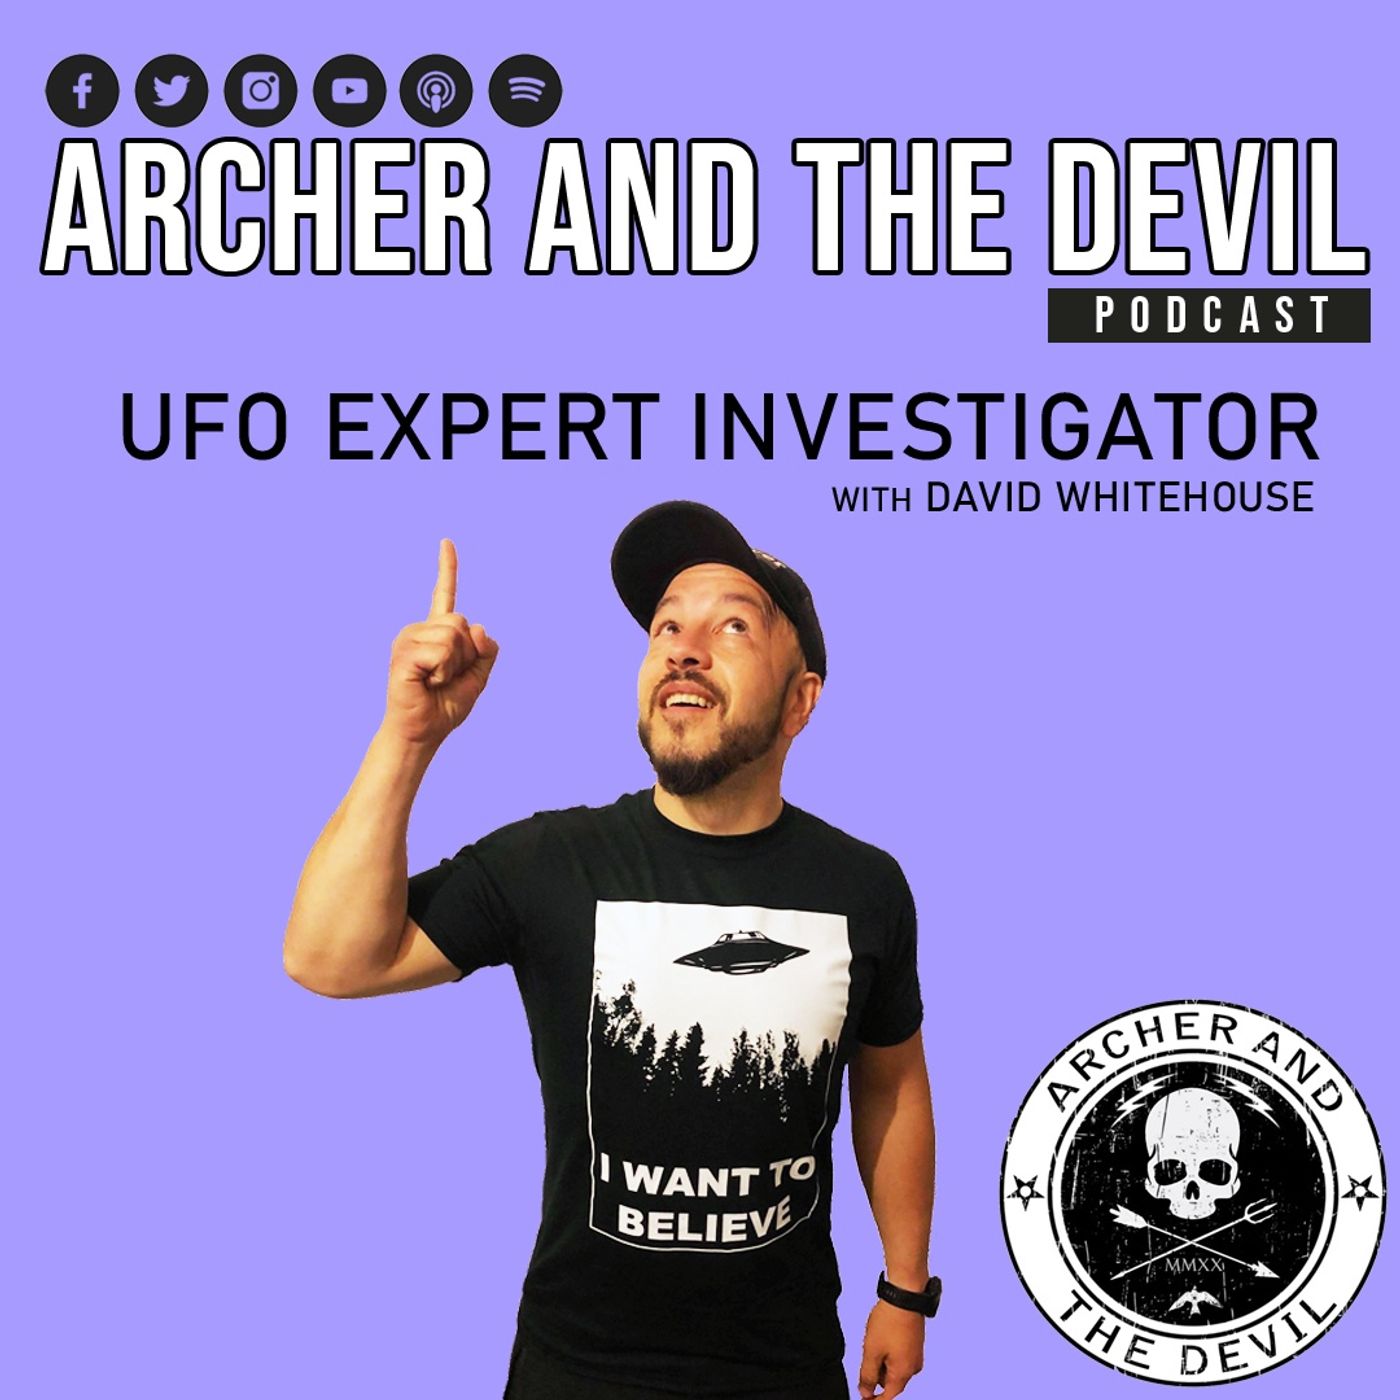 UFO & Alien Expert Investigator - David Whitehouse